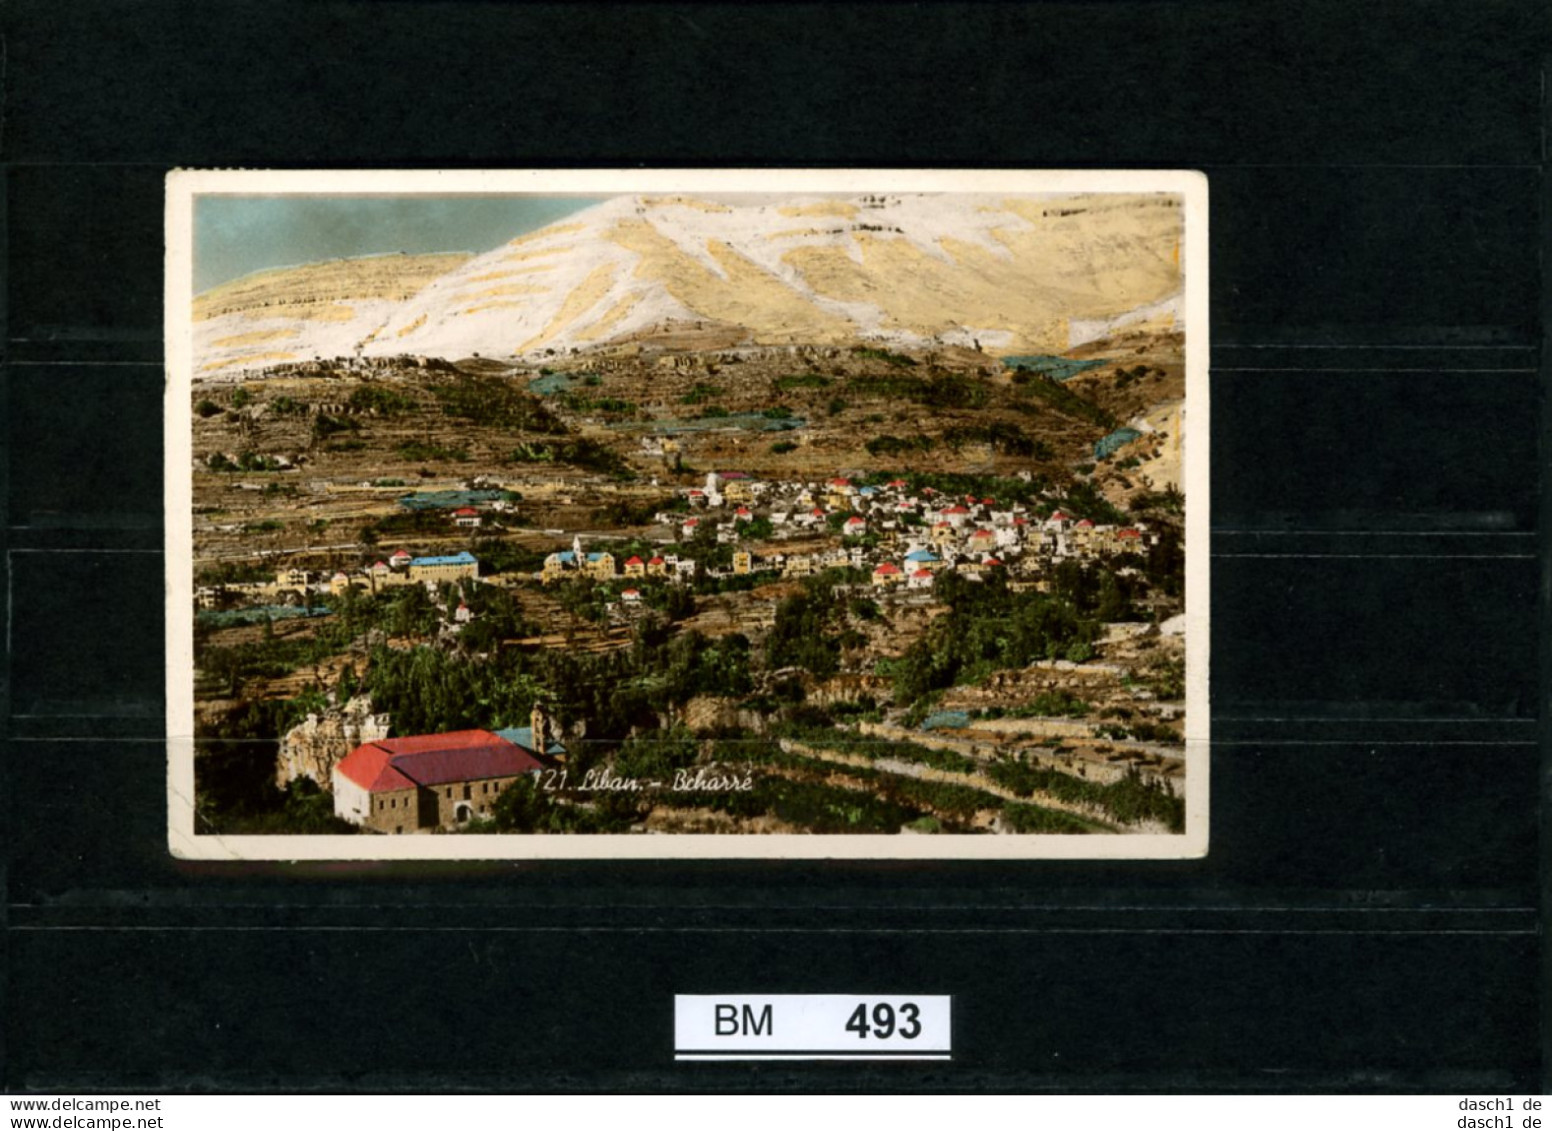 Libanon, AK Gelaufen 1955 - Bcharré - Libanon